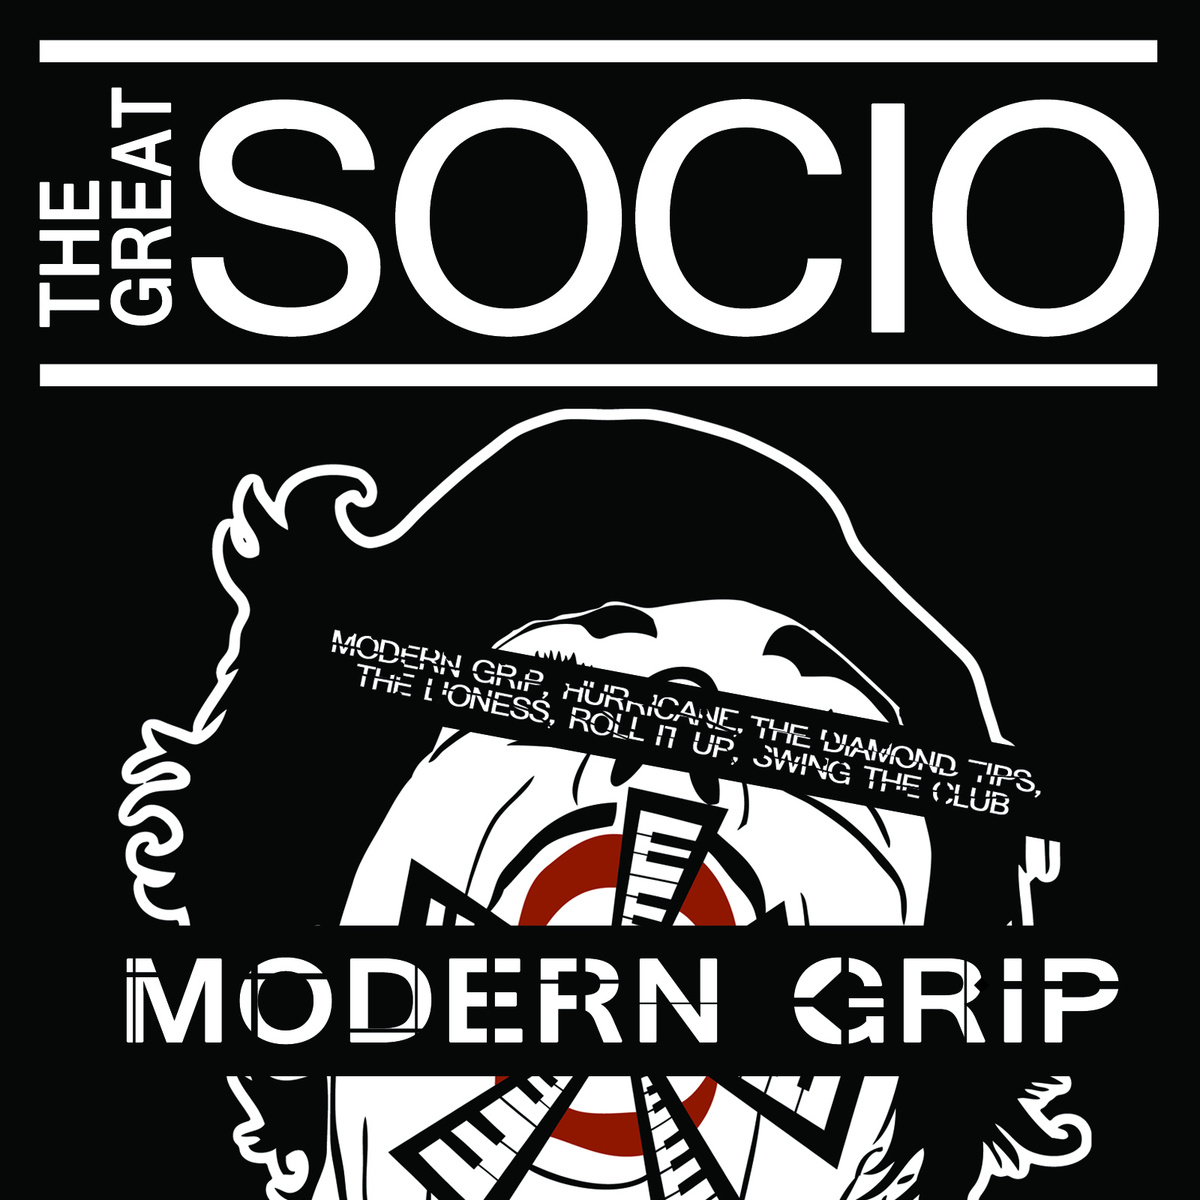 The Great Socio “Modern Grip”